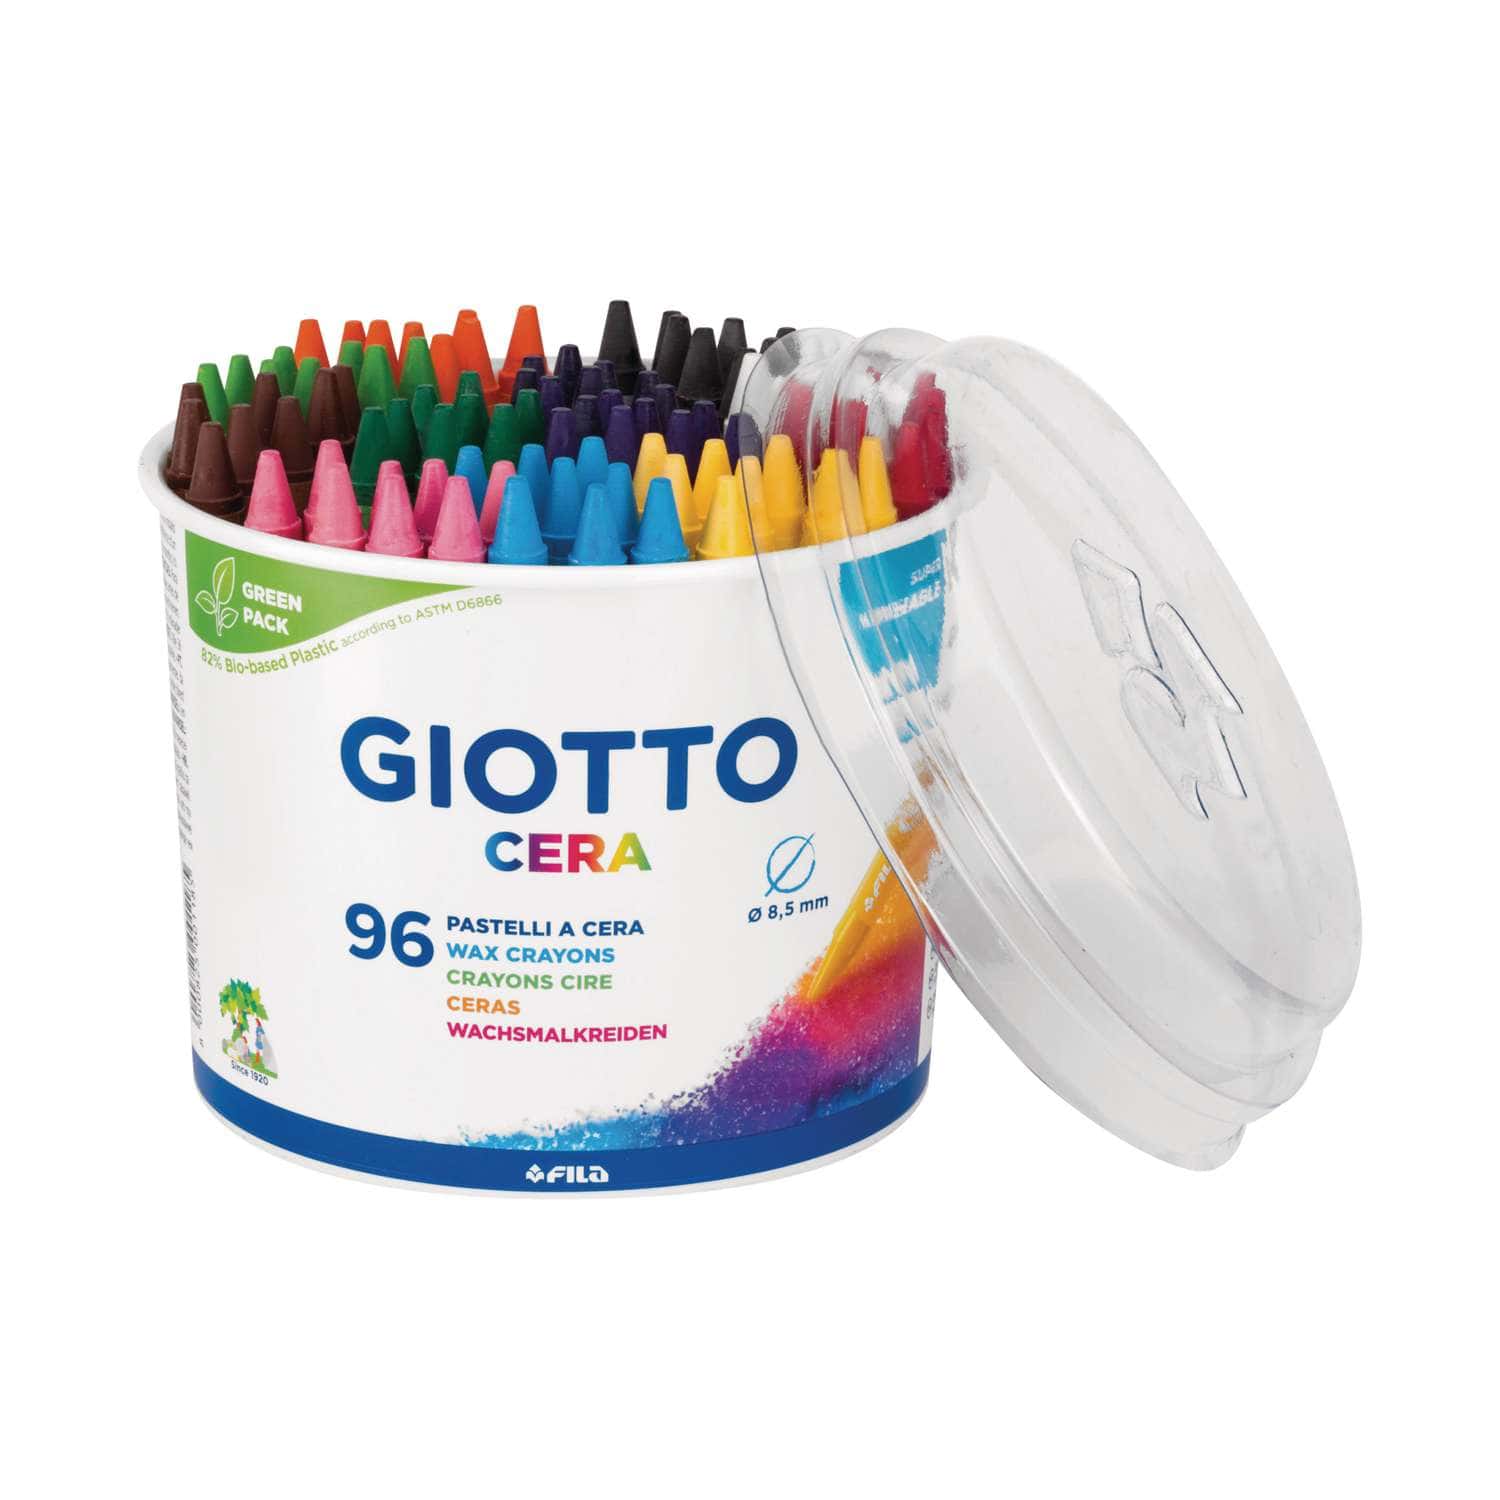 Giotto Cera Wax Crayon Large Set, 50,000+ Art Supplies